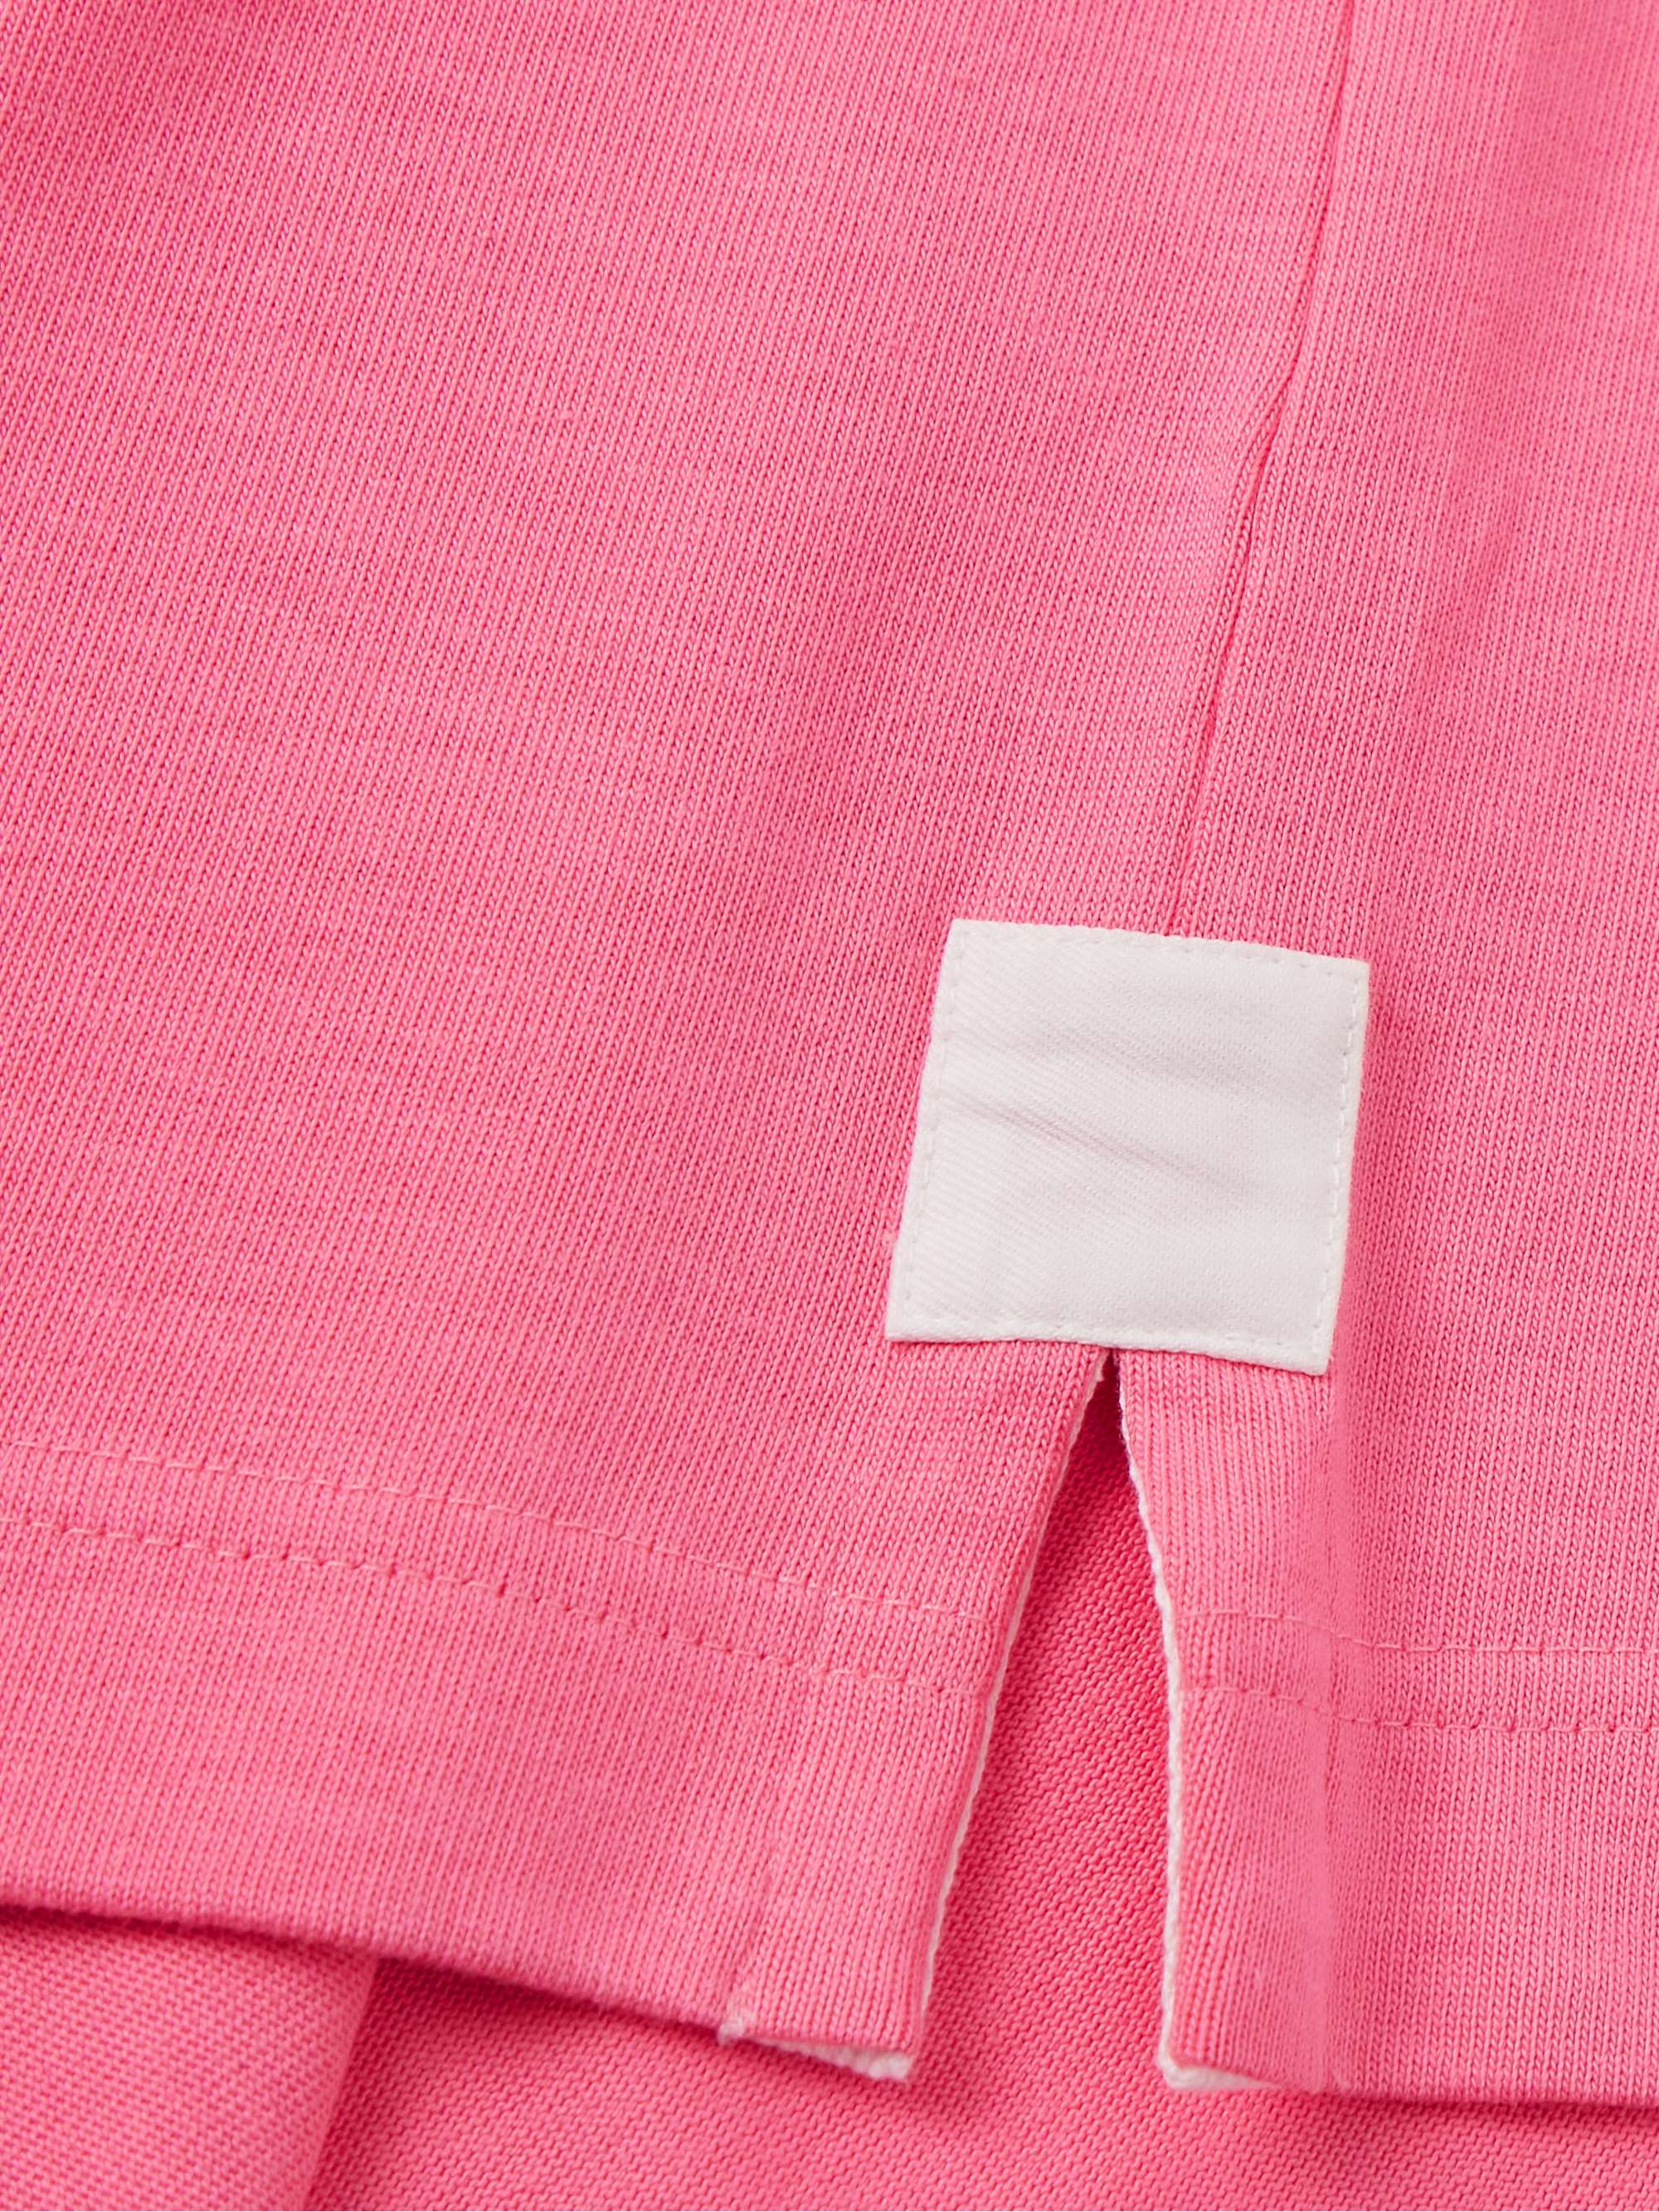 GIVENCHY Polo in jersey di cotone color-block con logo ricamato